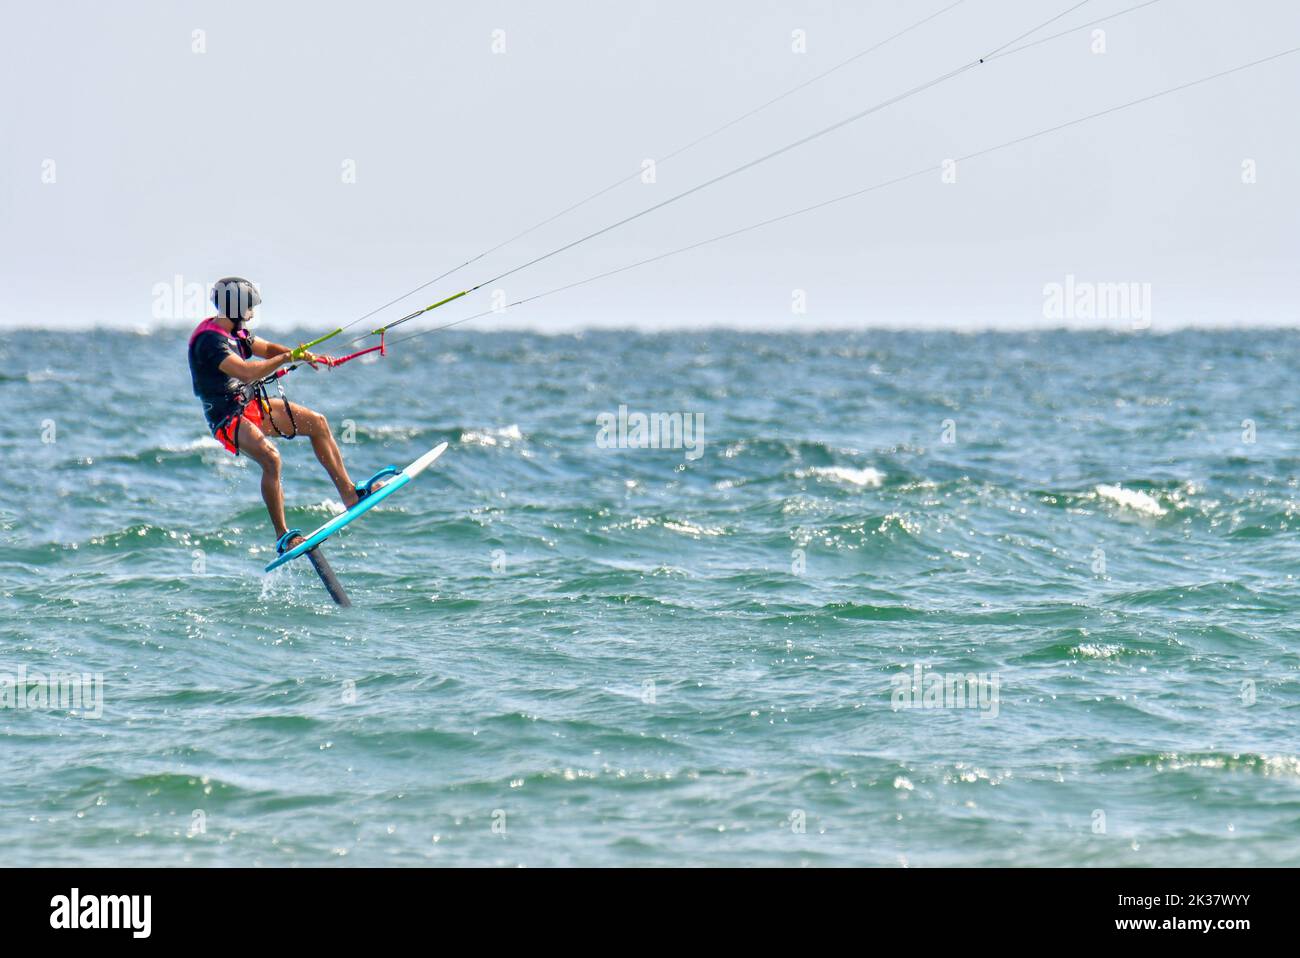 A kitesurfer sailing in the Mediterranean Sea Stock Photo